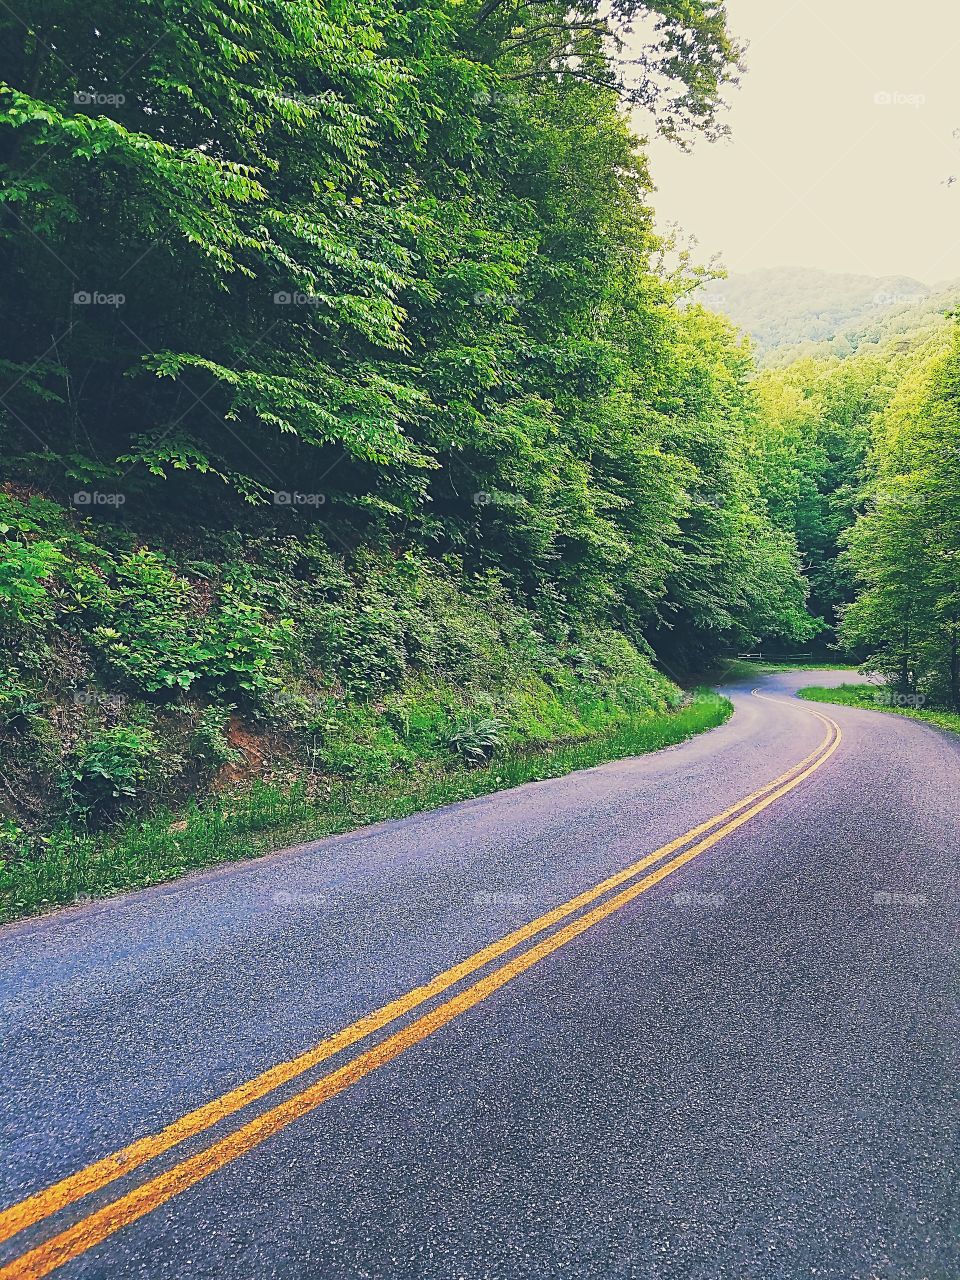 mountain side road